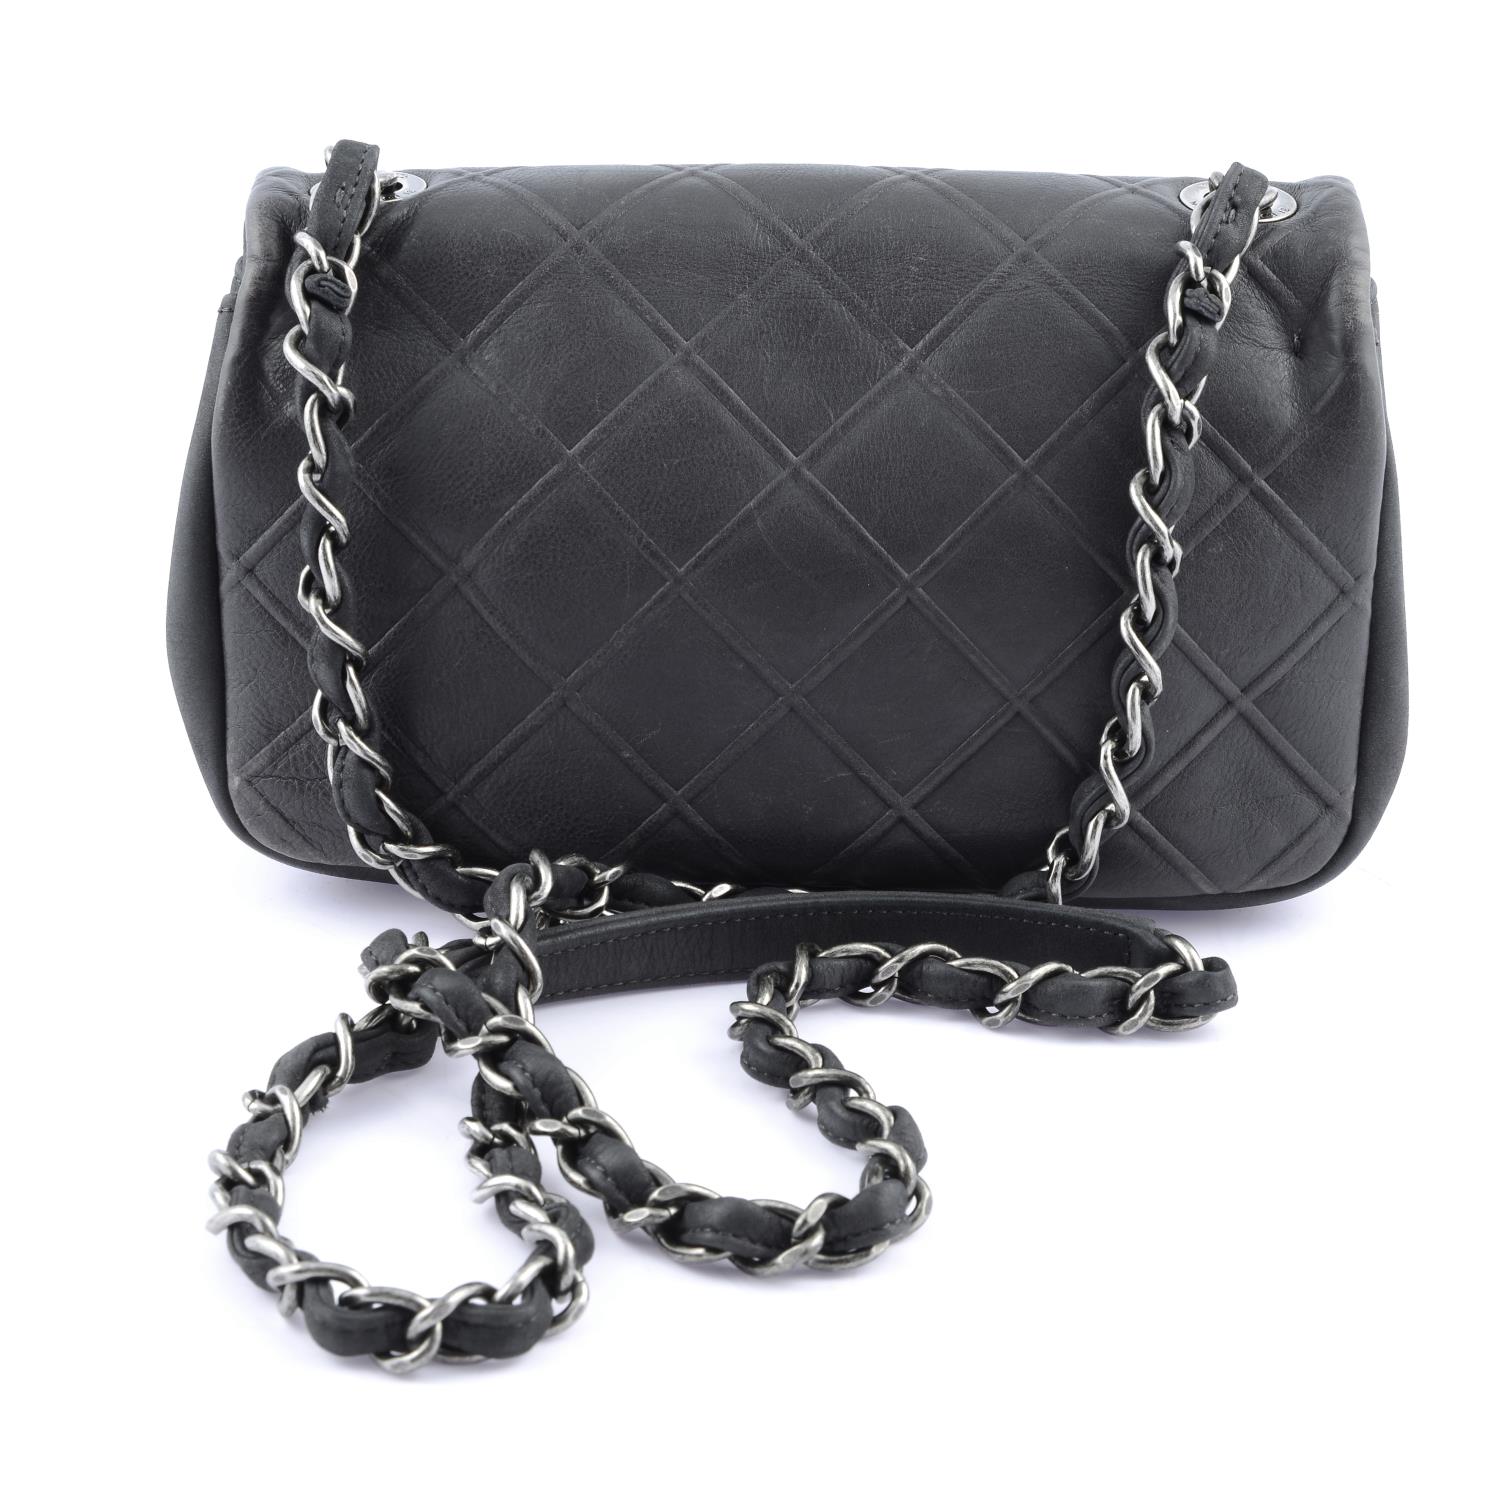 CHANEL - a small grey handbag. - Image 2 of 4